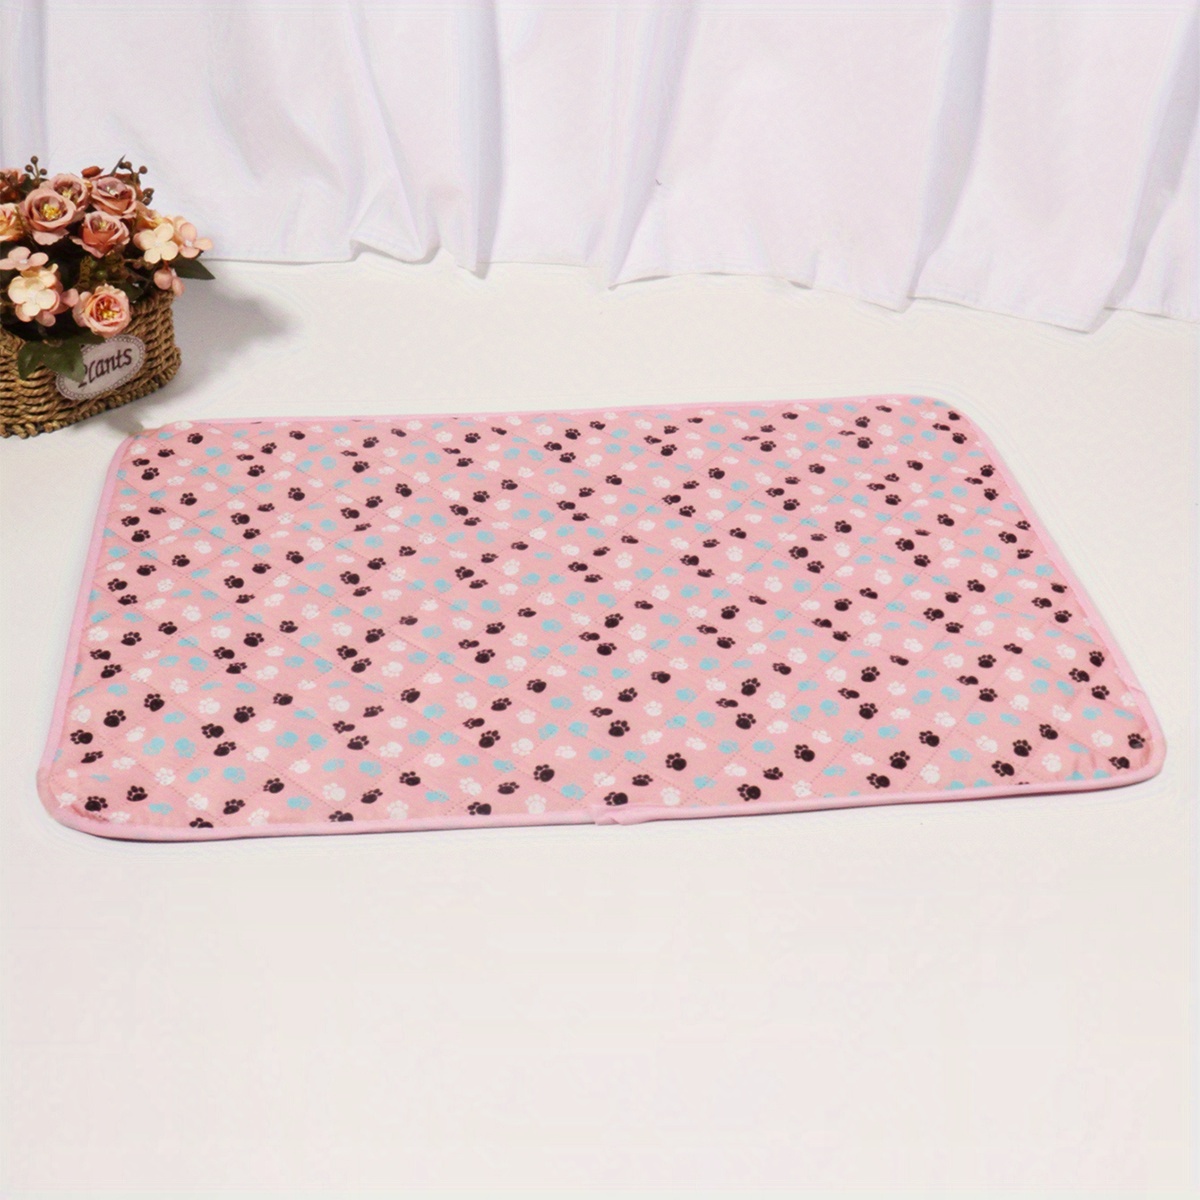 pet comfortable cooling mat with cute patterns cat and dog sleeping mat pet beds sofa cushion details 5